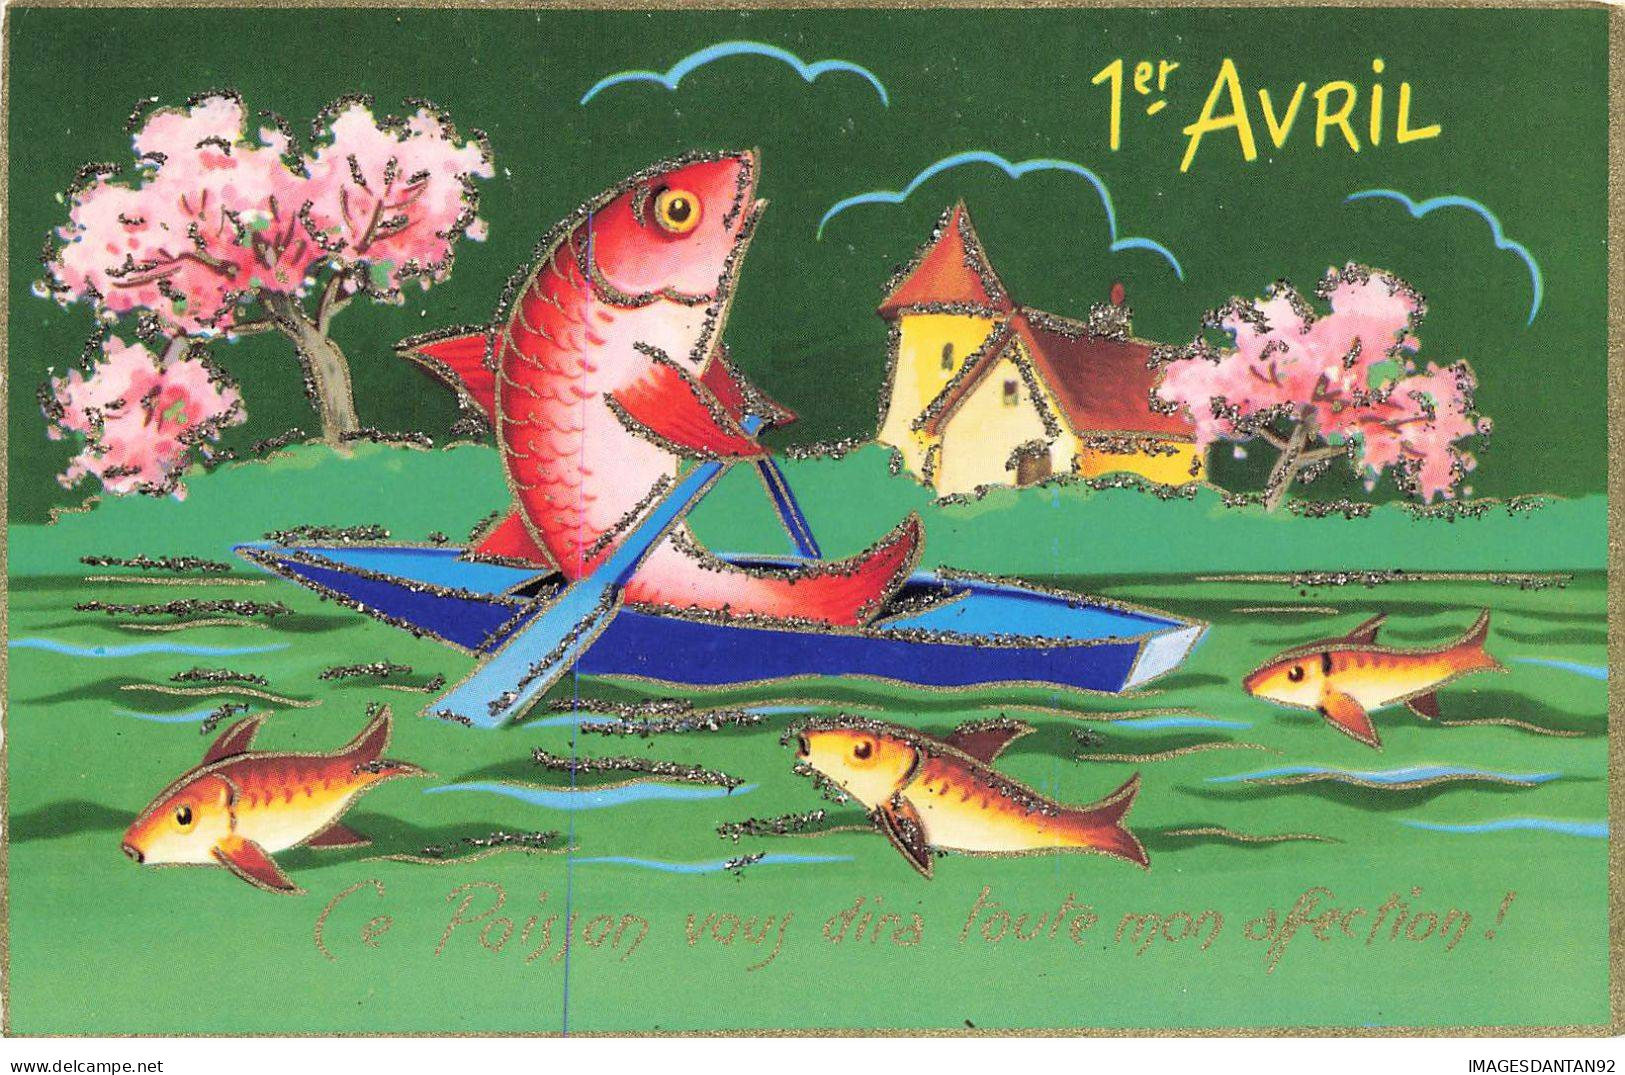 FETES #MK48891 1 ER AVRIL POISSON SUR UNE BARQUE - 1° Aprile (pesce Di Aprile)